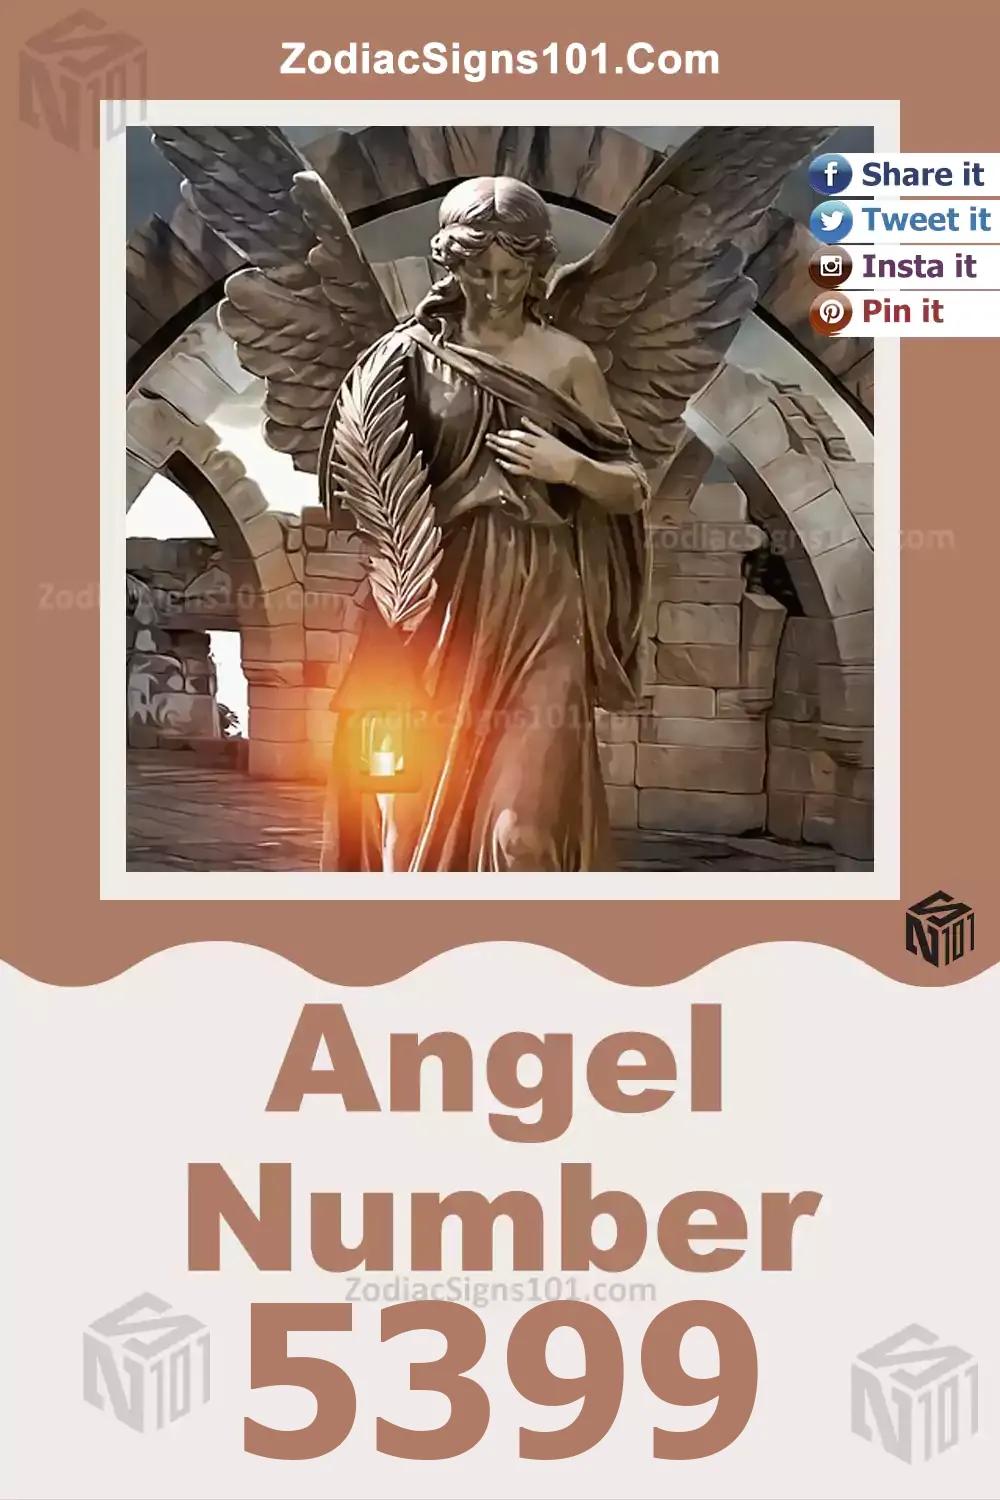 5399-Angel-Number-Meaning.jpg